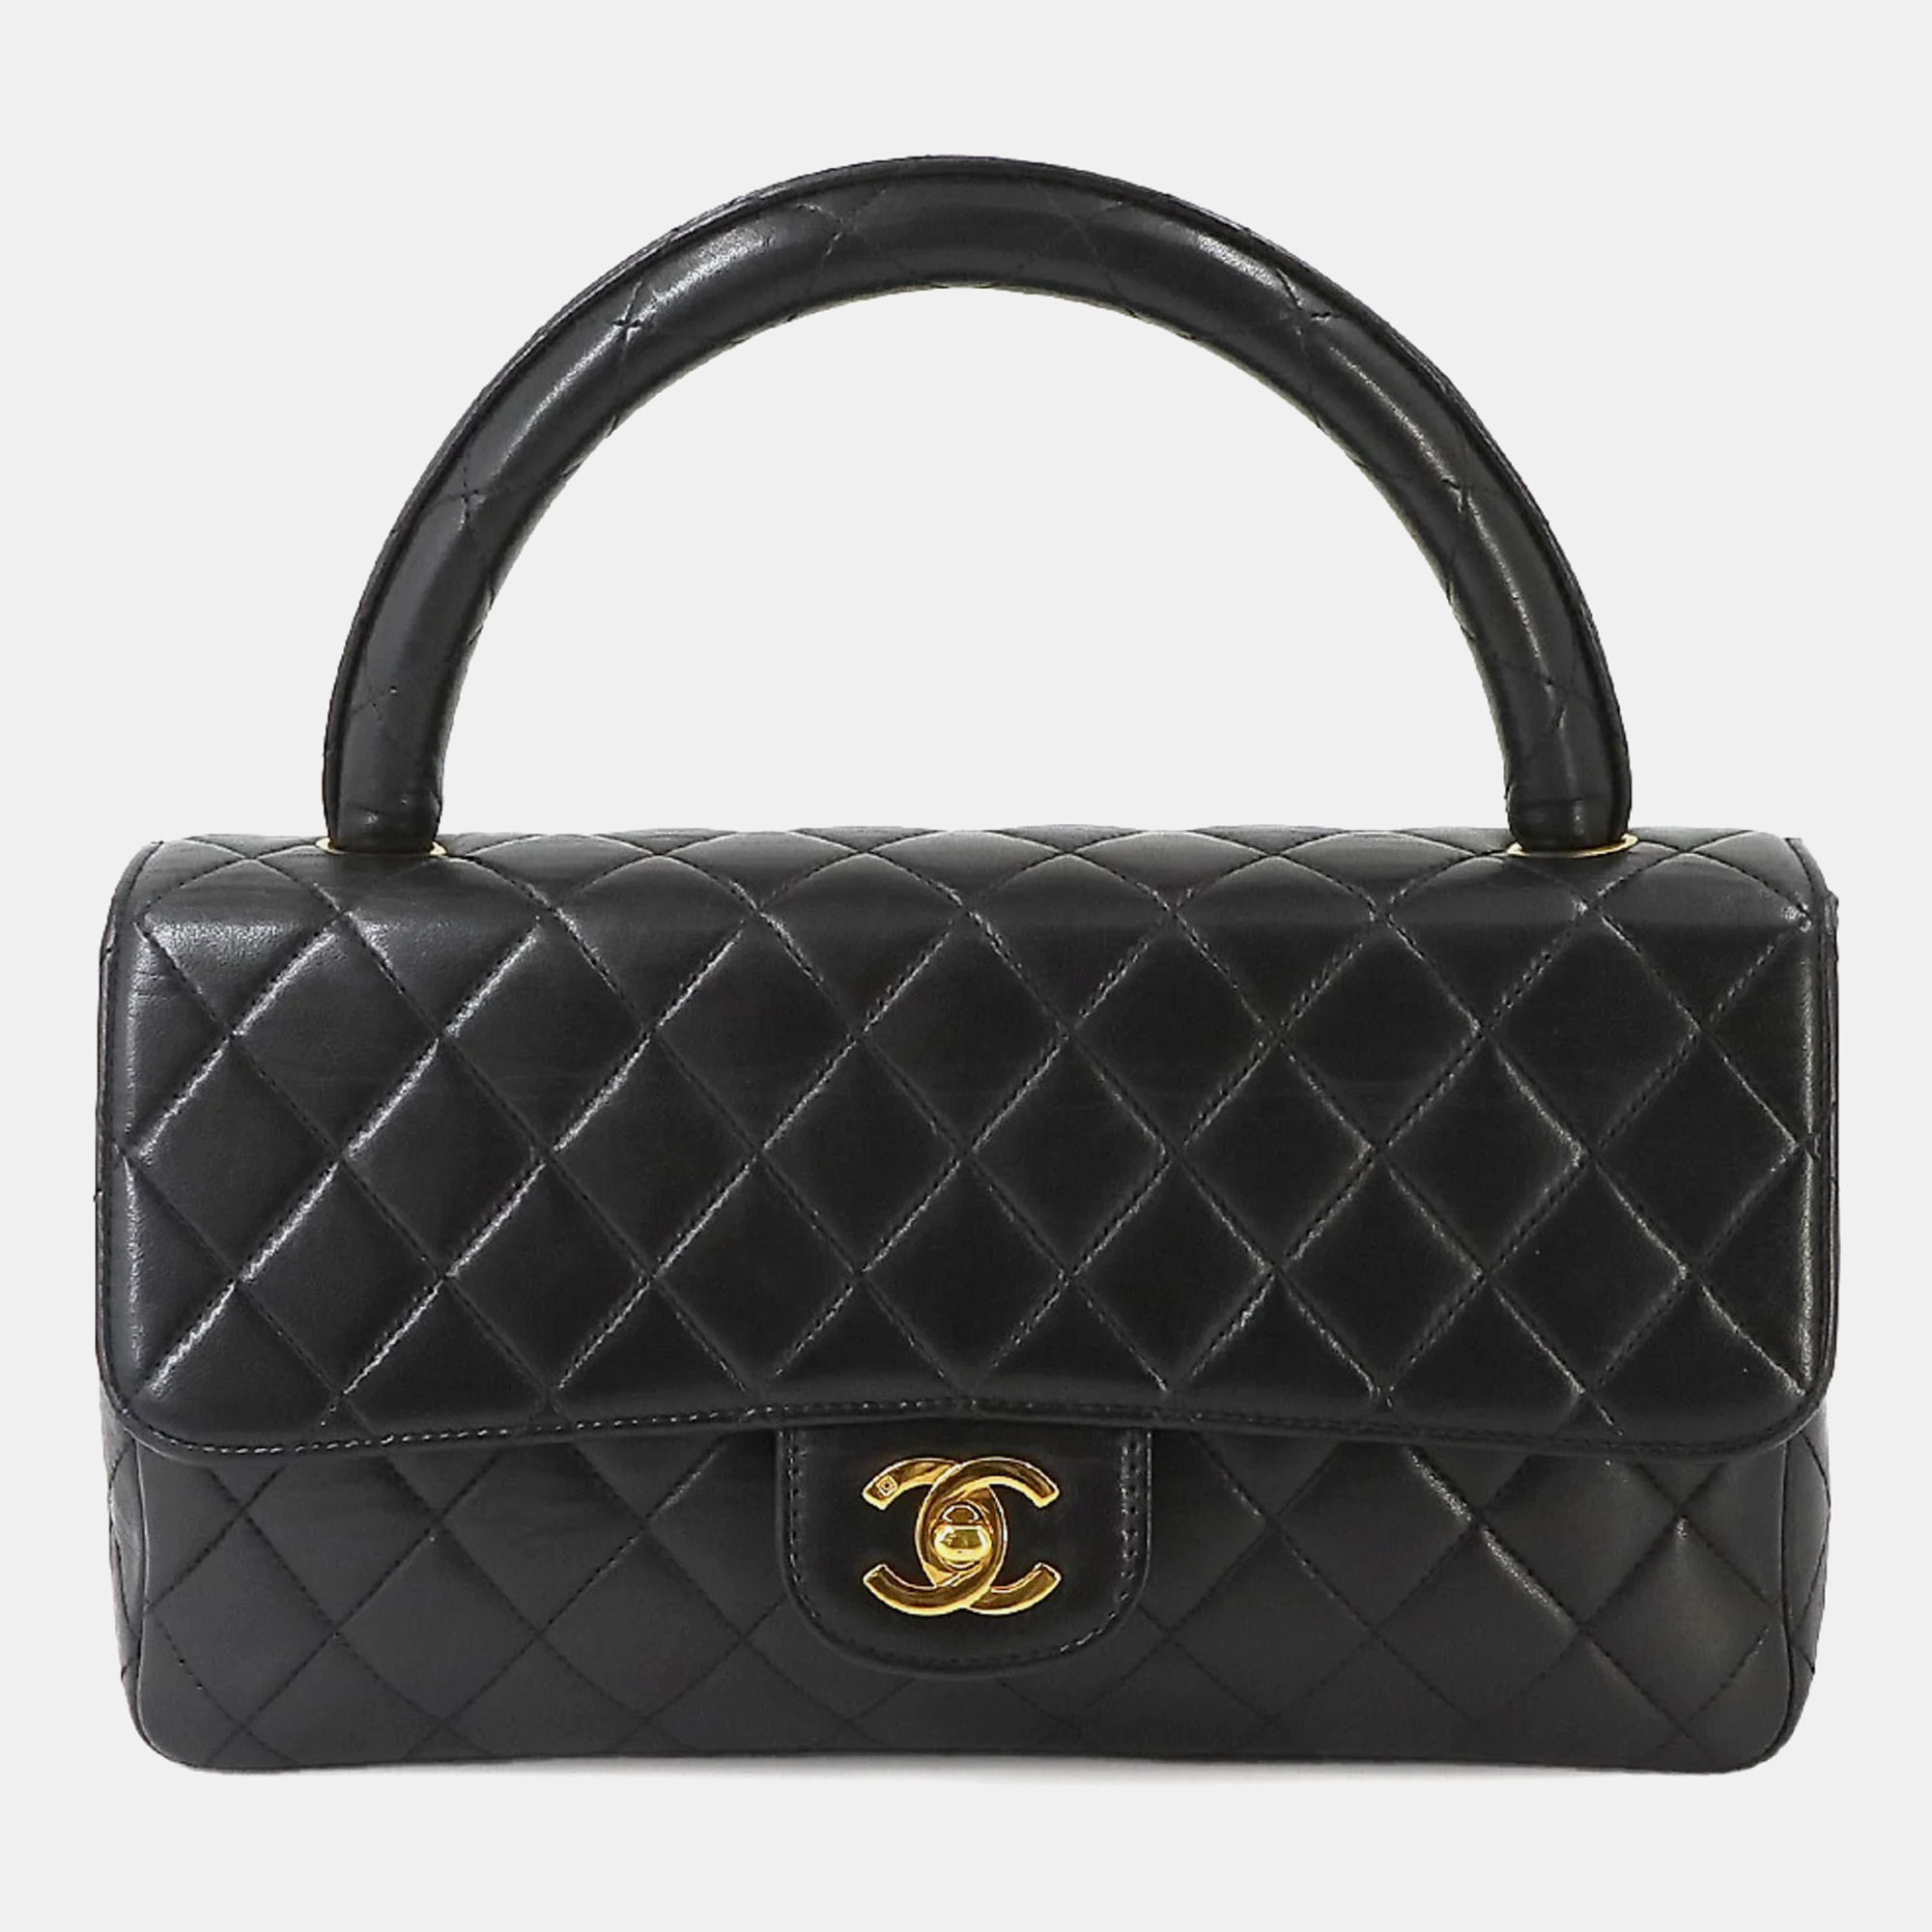 

Chanel Black Leather Medium Kelly Top Handle Bag